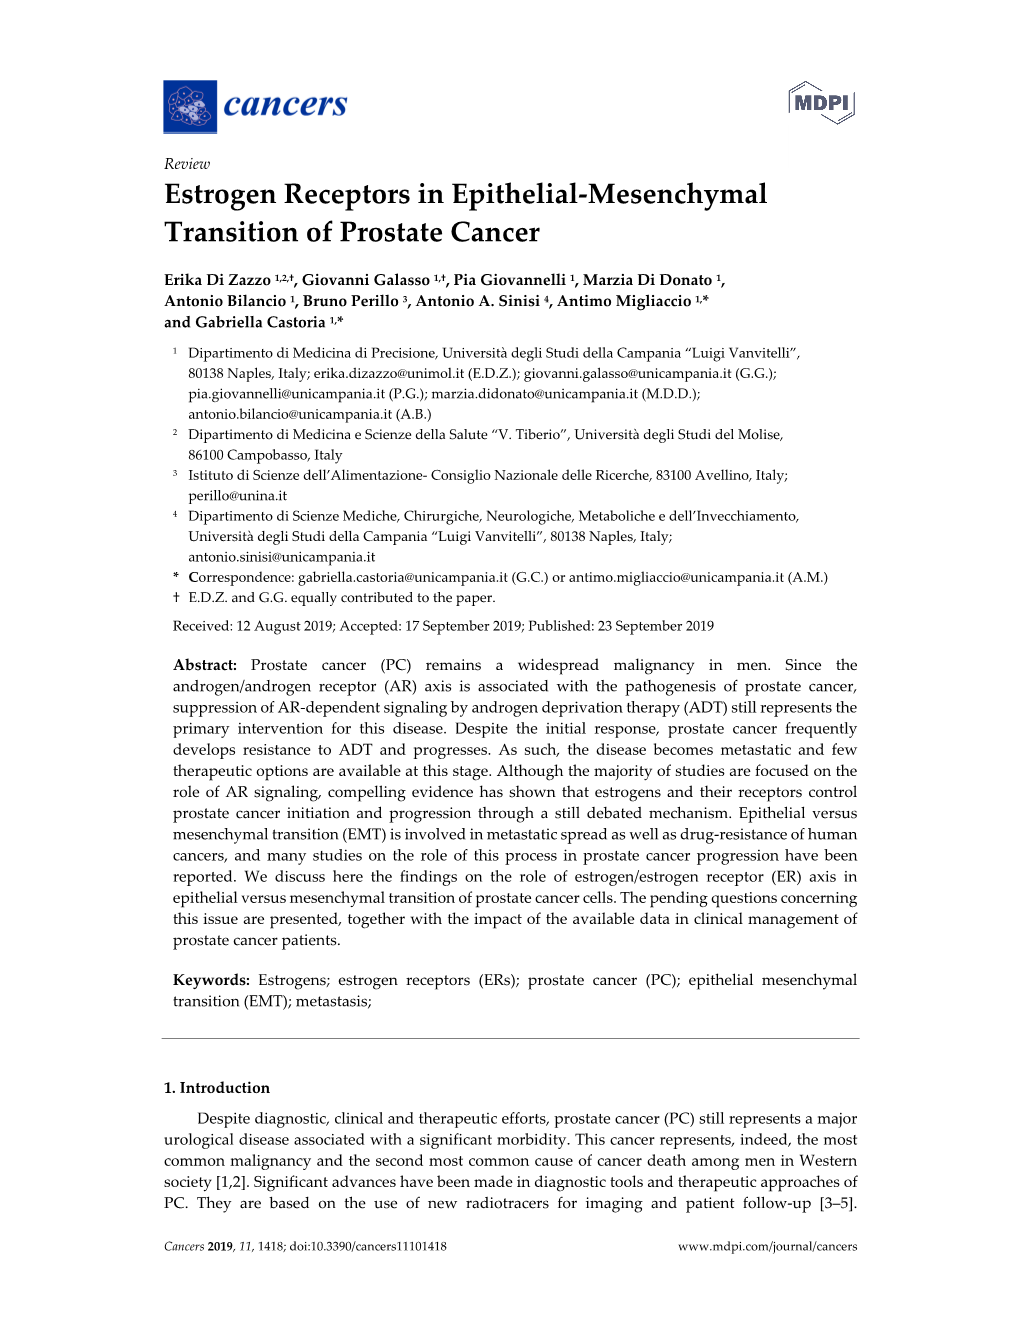 Estrogen Receptors in Epithelial-Mesenchymal Transition of Prostate Cancer